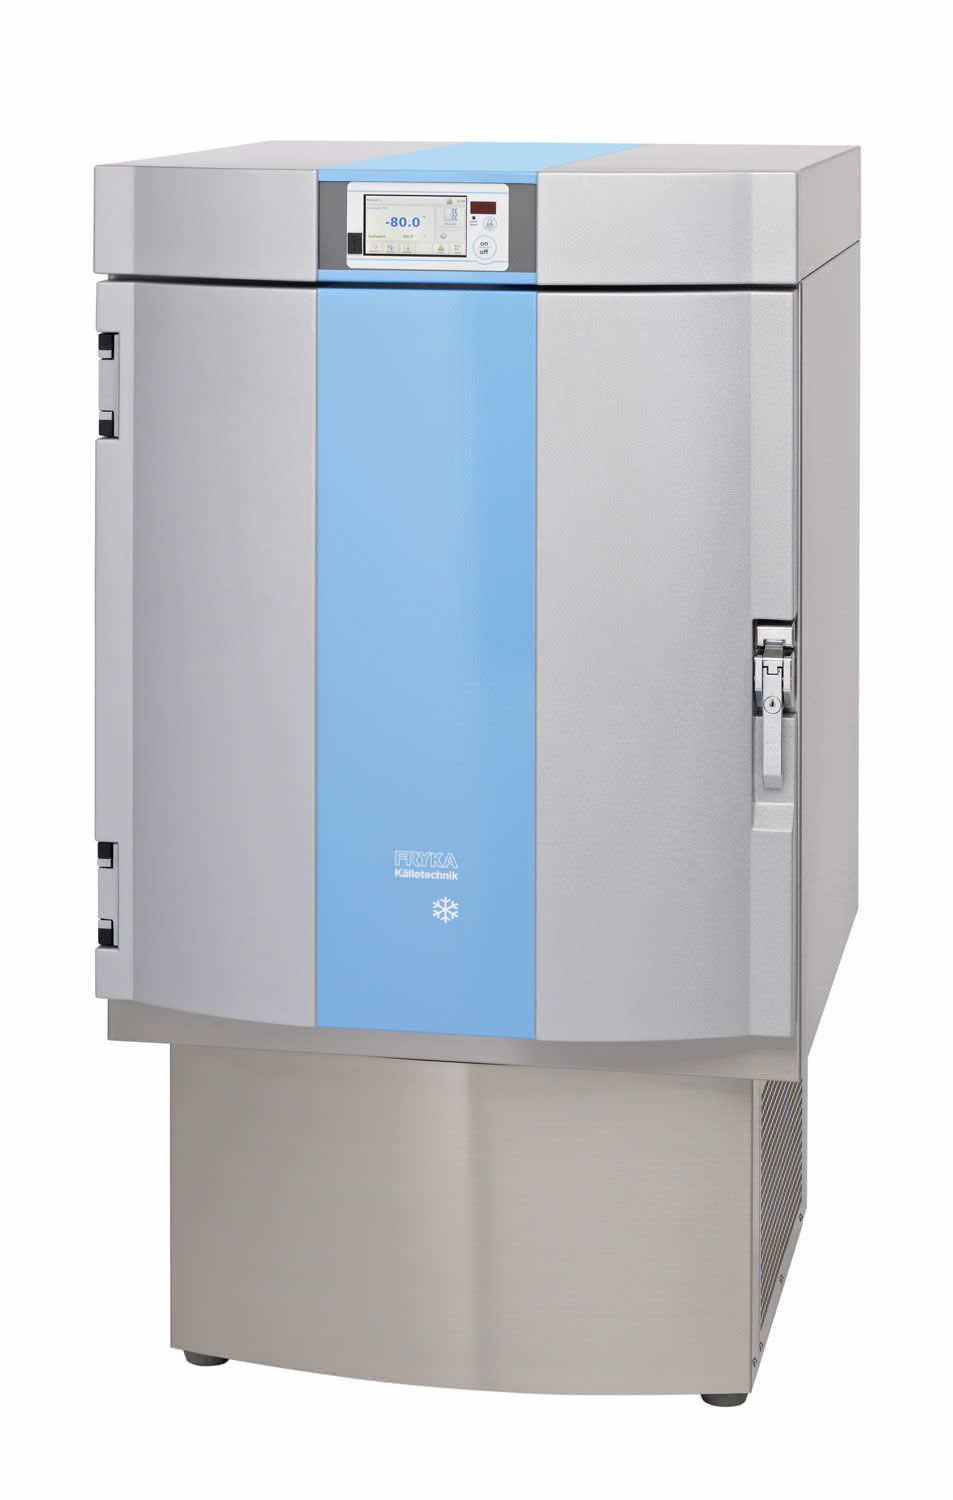 Laboratory freezer / cabinet / 1-door -80°C ... -10°C | TS 100//LOGG FRYKA-Kältetechnik GmbH